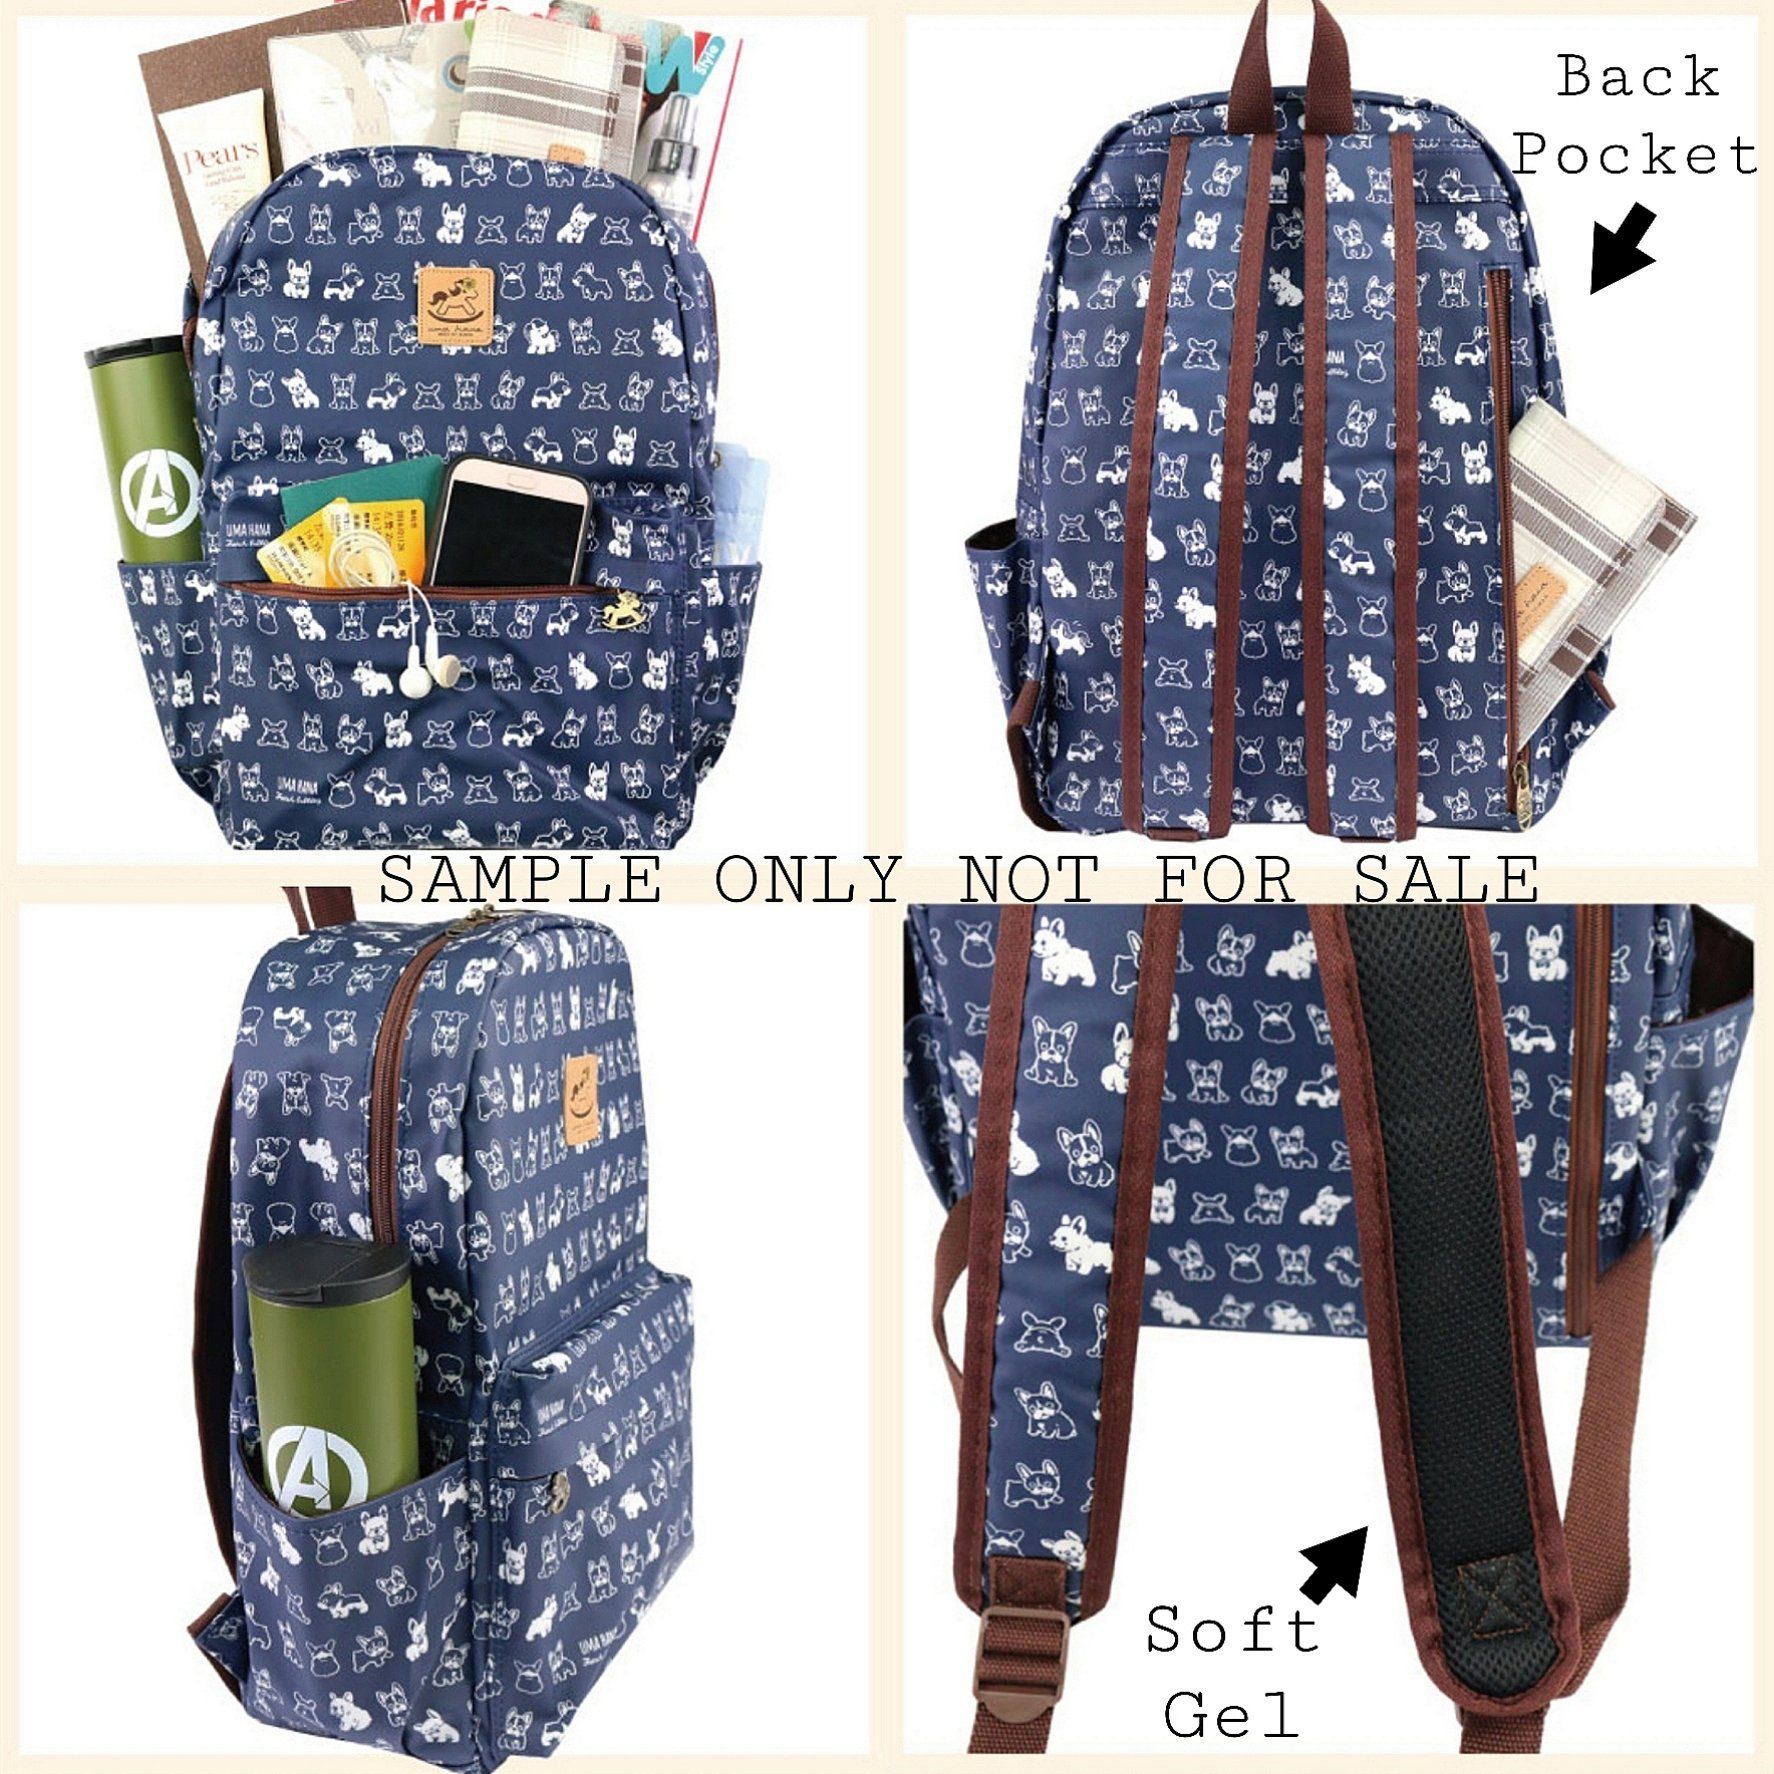 Midnight Blue Shiba Inu Large Backpack Backpack Tworgis 